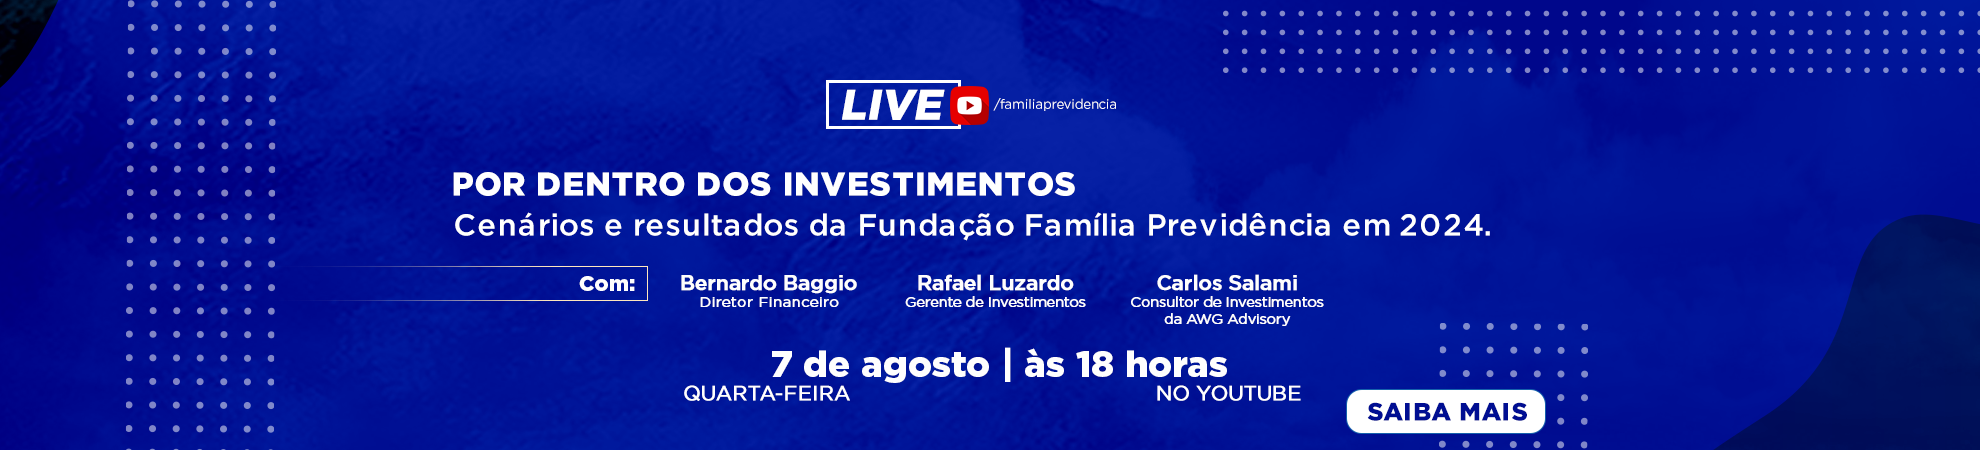 banner_live_investimentos